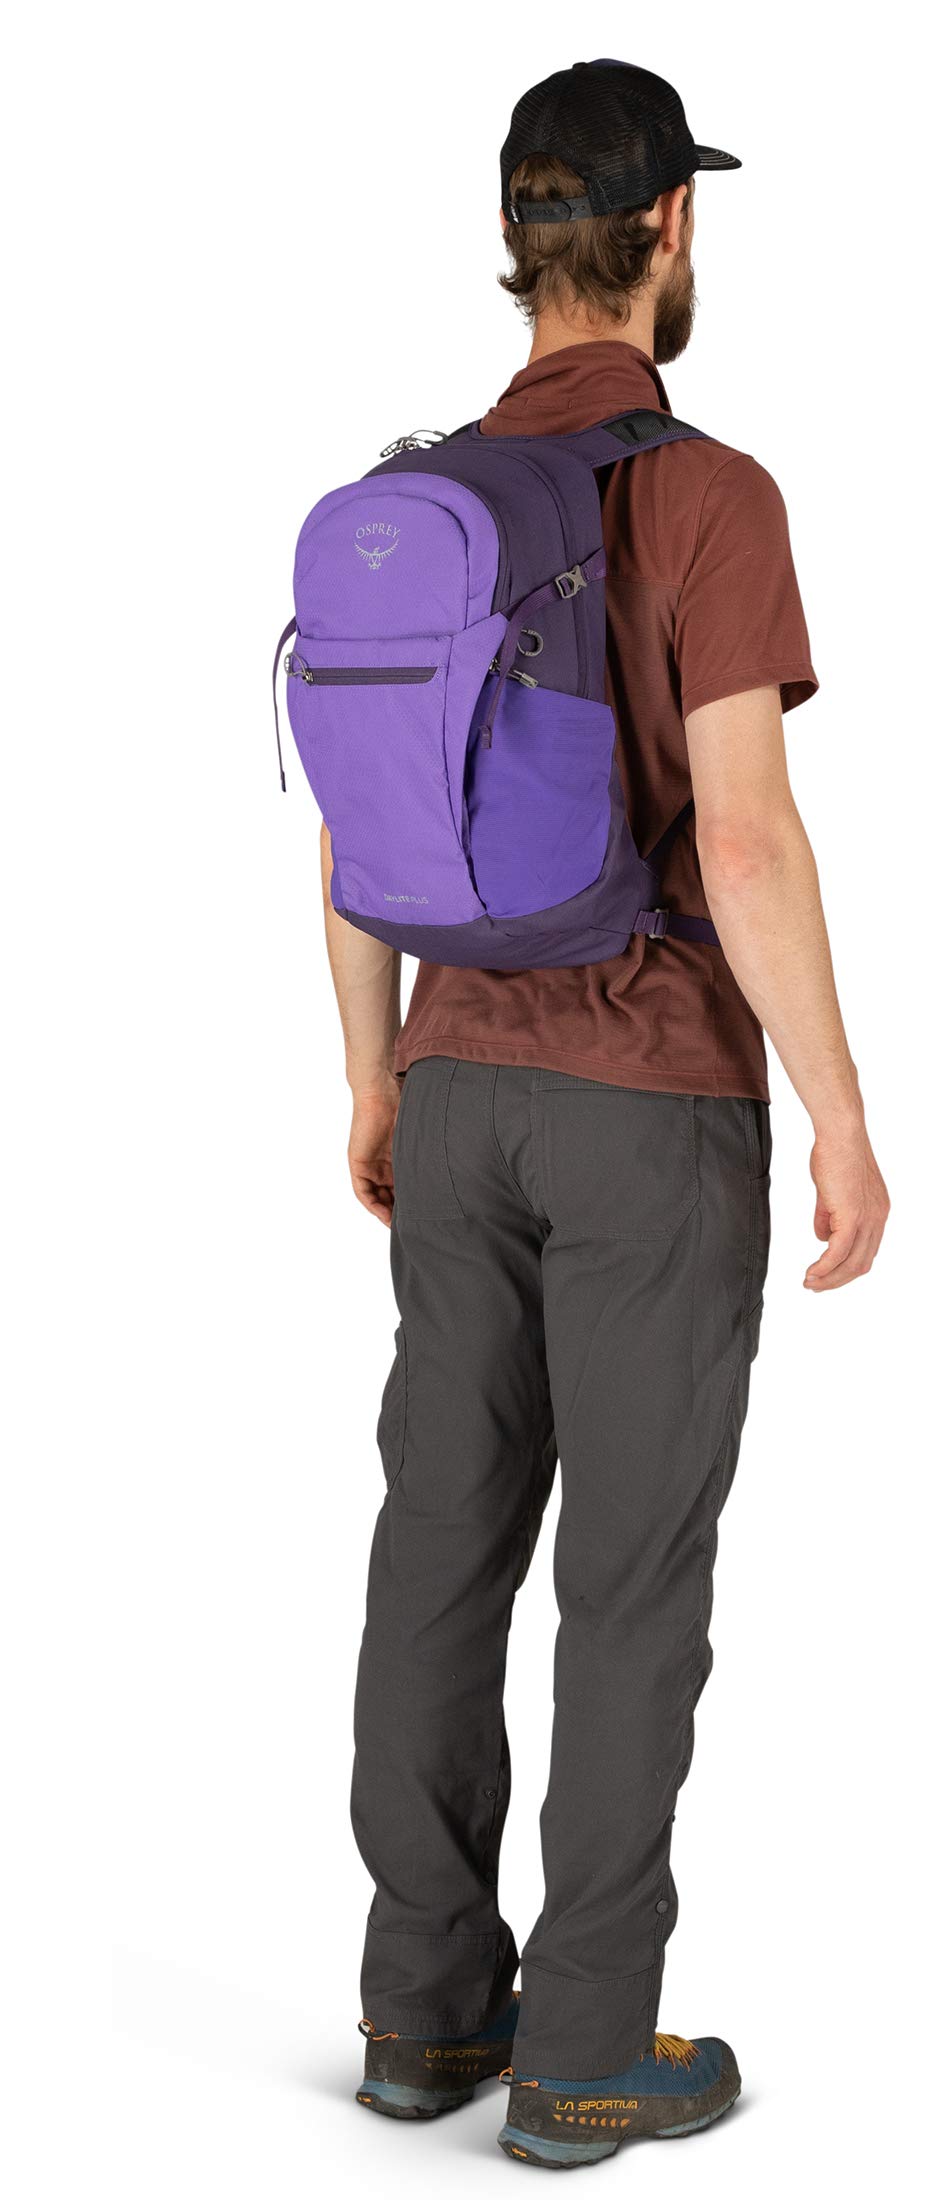 Osprey Daylite Plus Daypack, Dream Purple, One Size